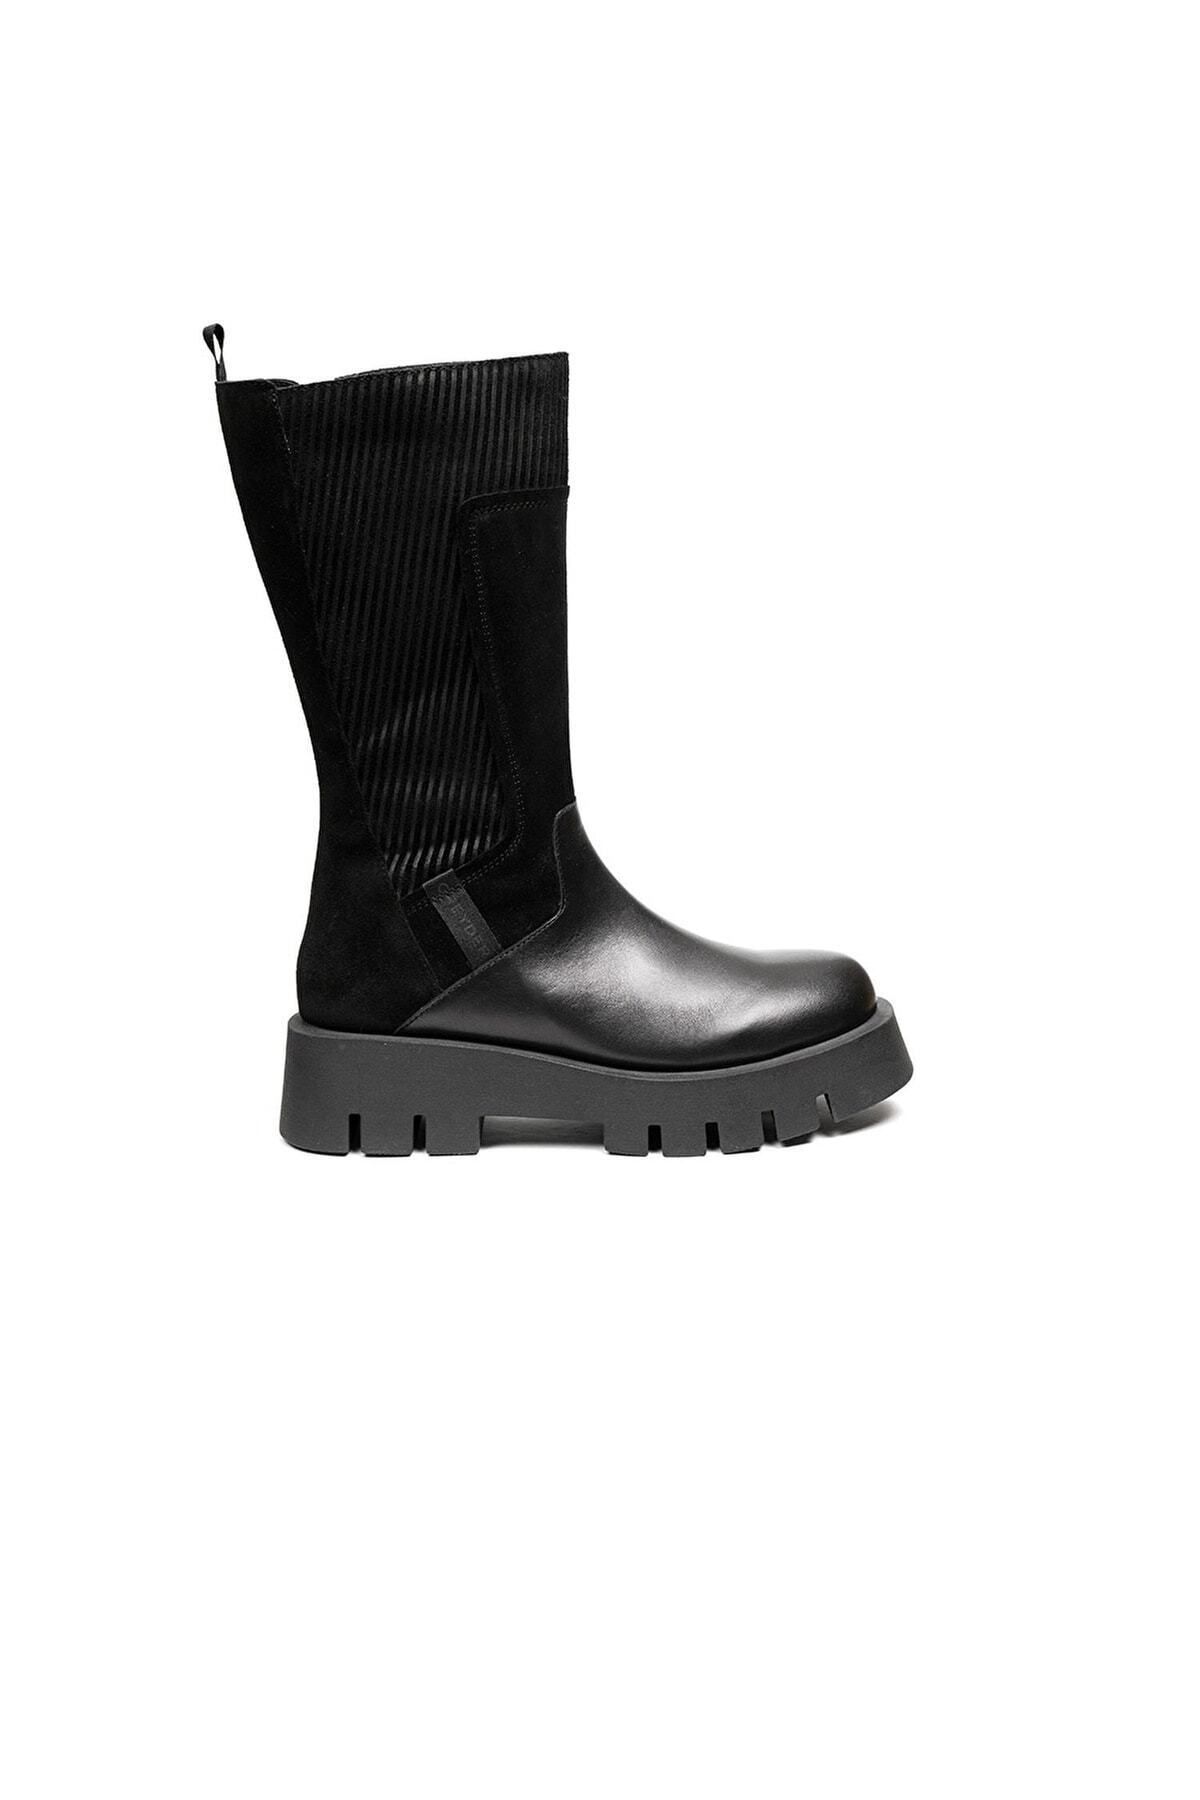 Greyder Kadın Siyah Çizme 2k2ub32022s Fiyatı, Yorumları - Trendyol